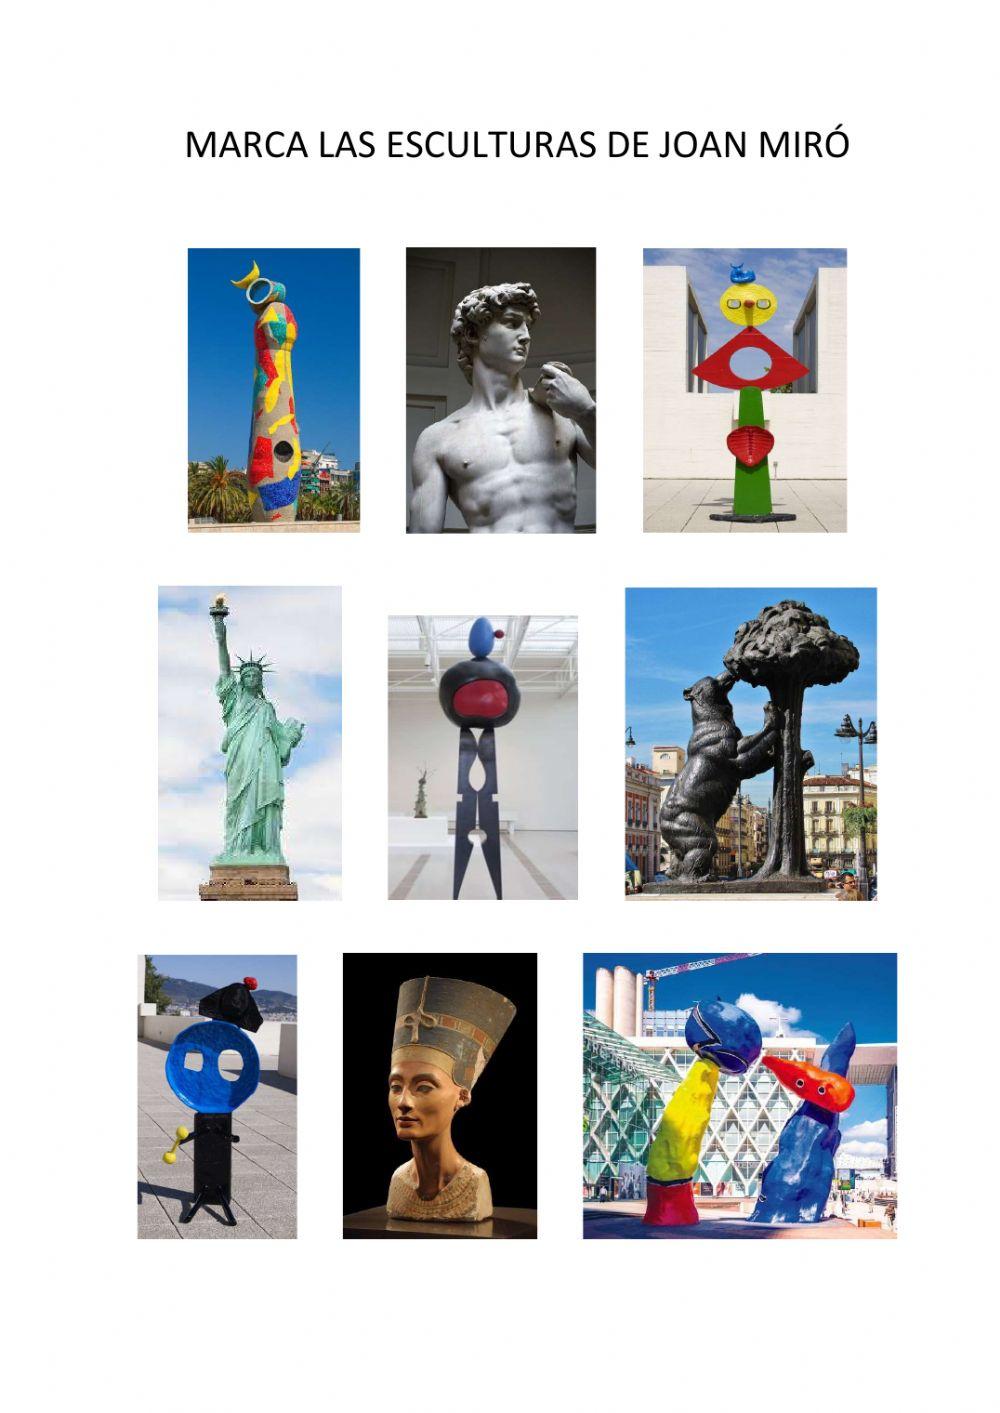 Esculturas de Miró